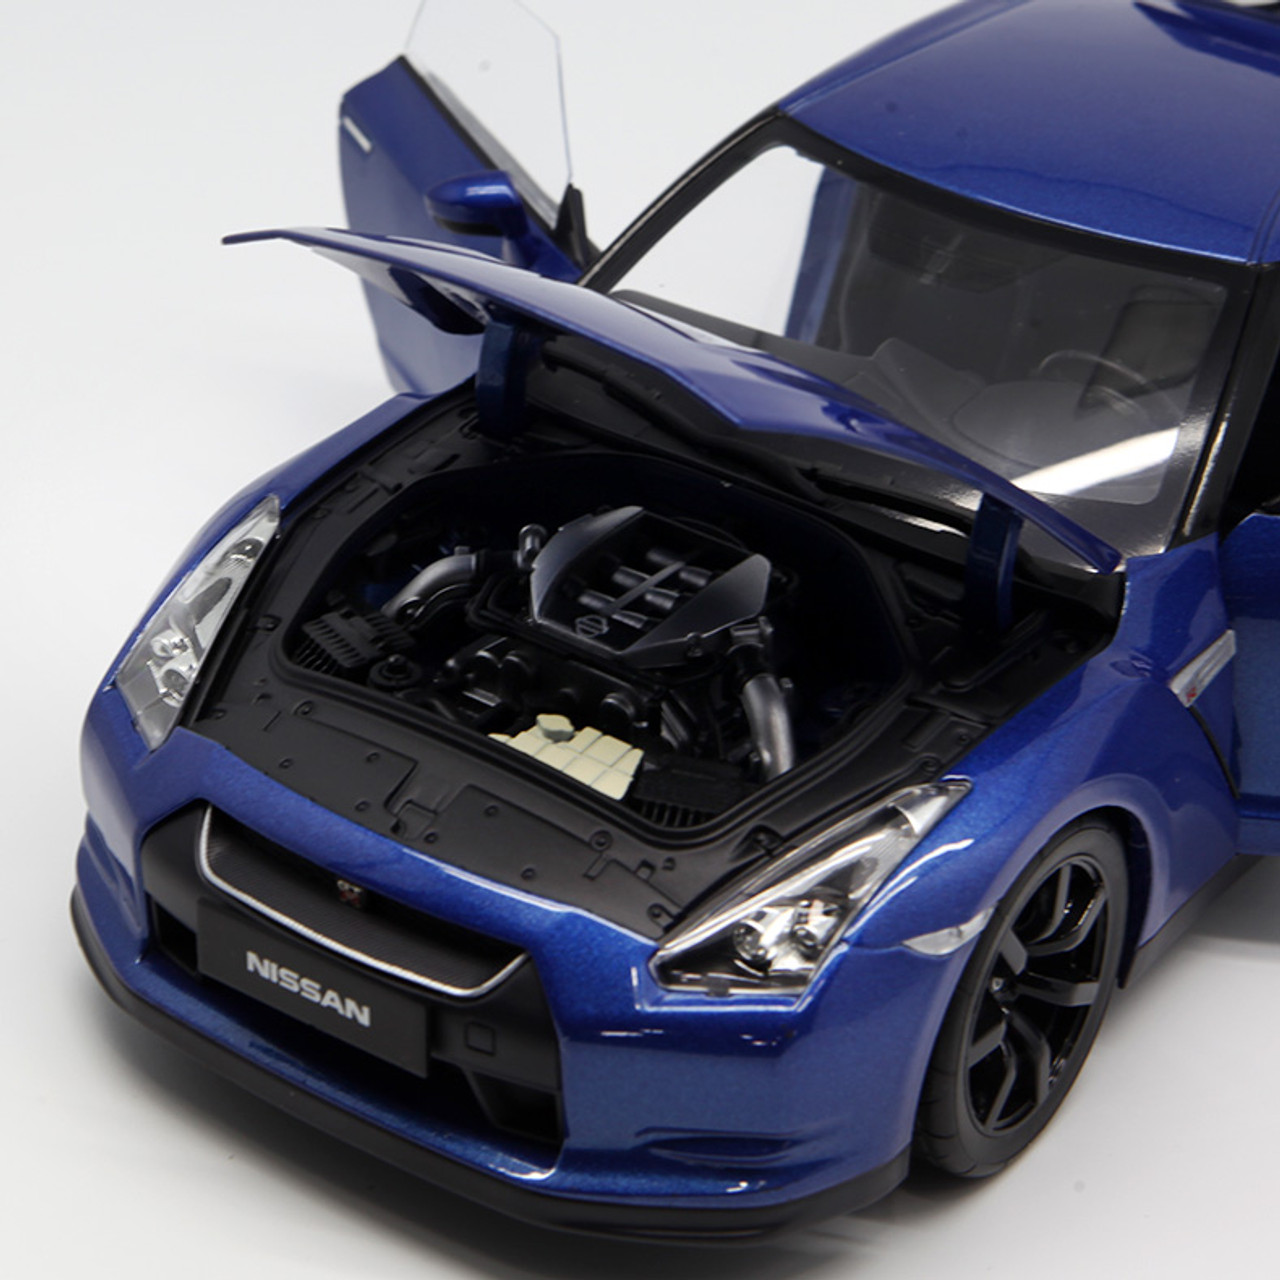 1/18 Norev Nissan GTR GT-R (Blue) Diecast Car Model